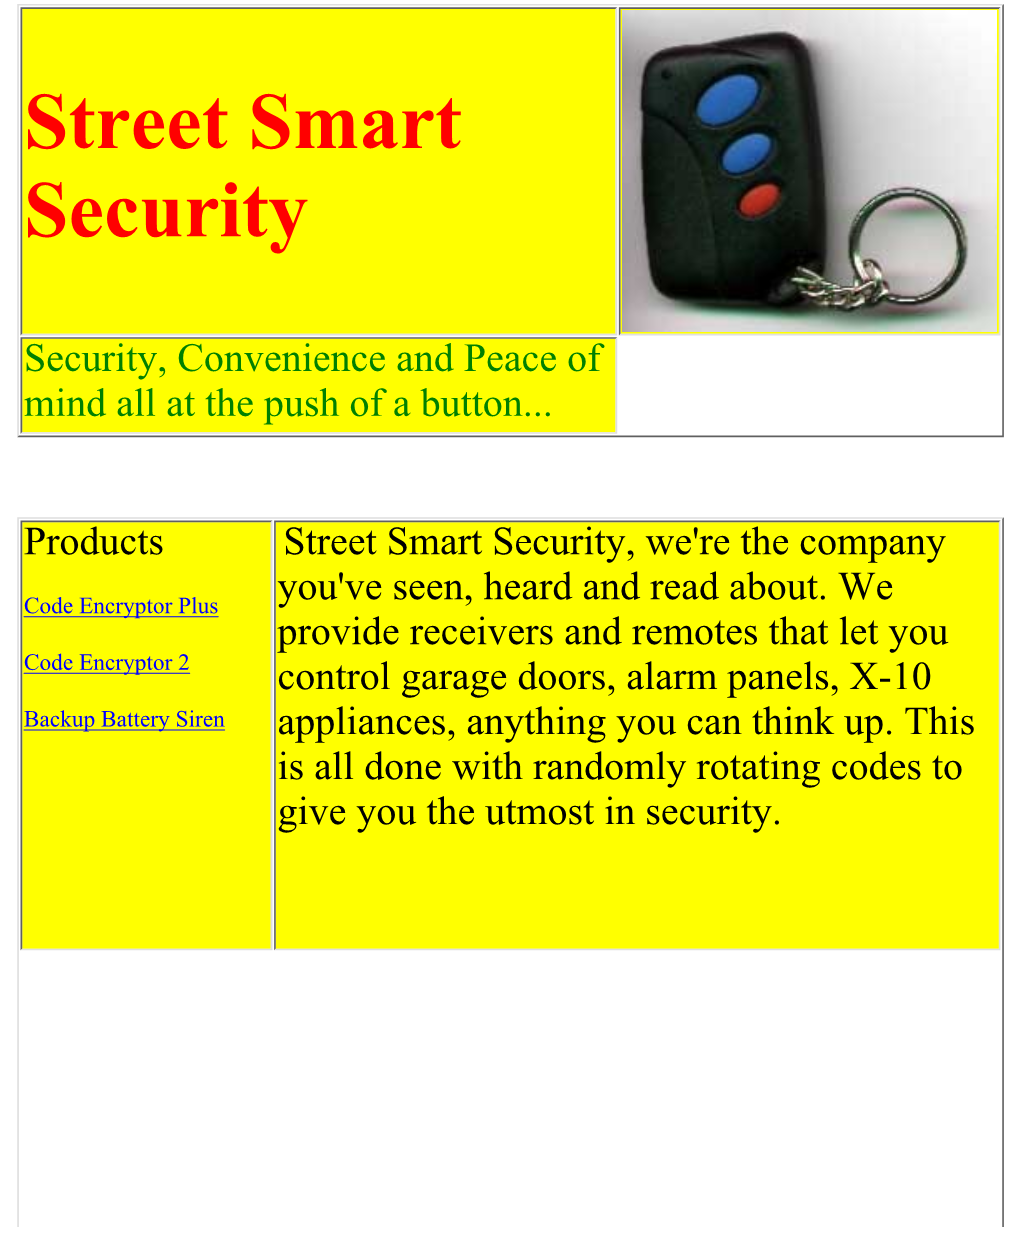 Street Smart Security